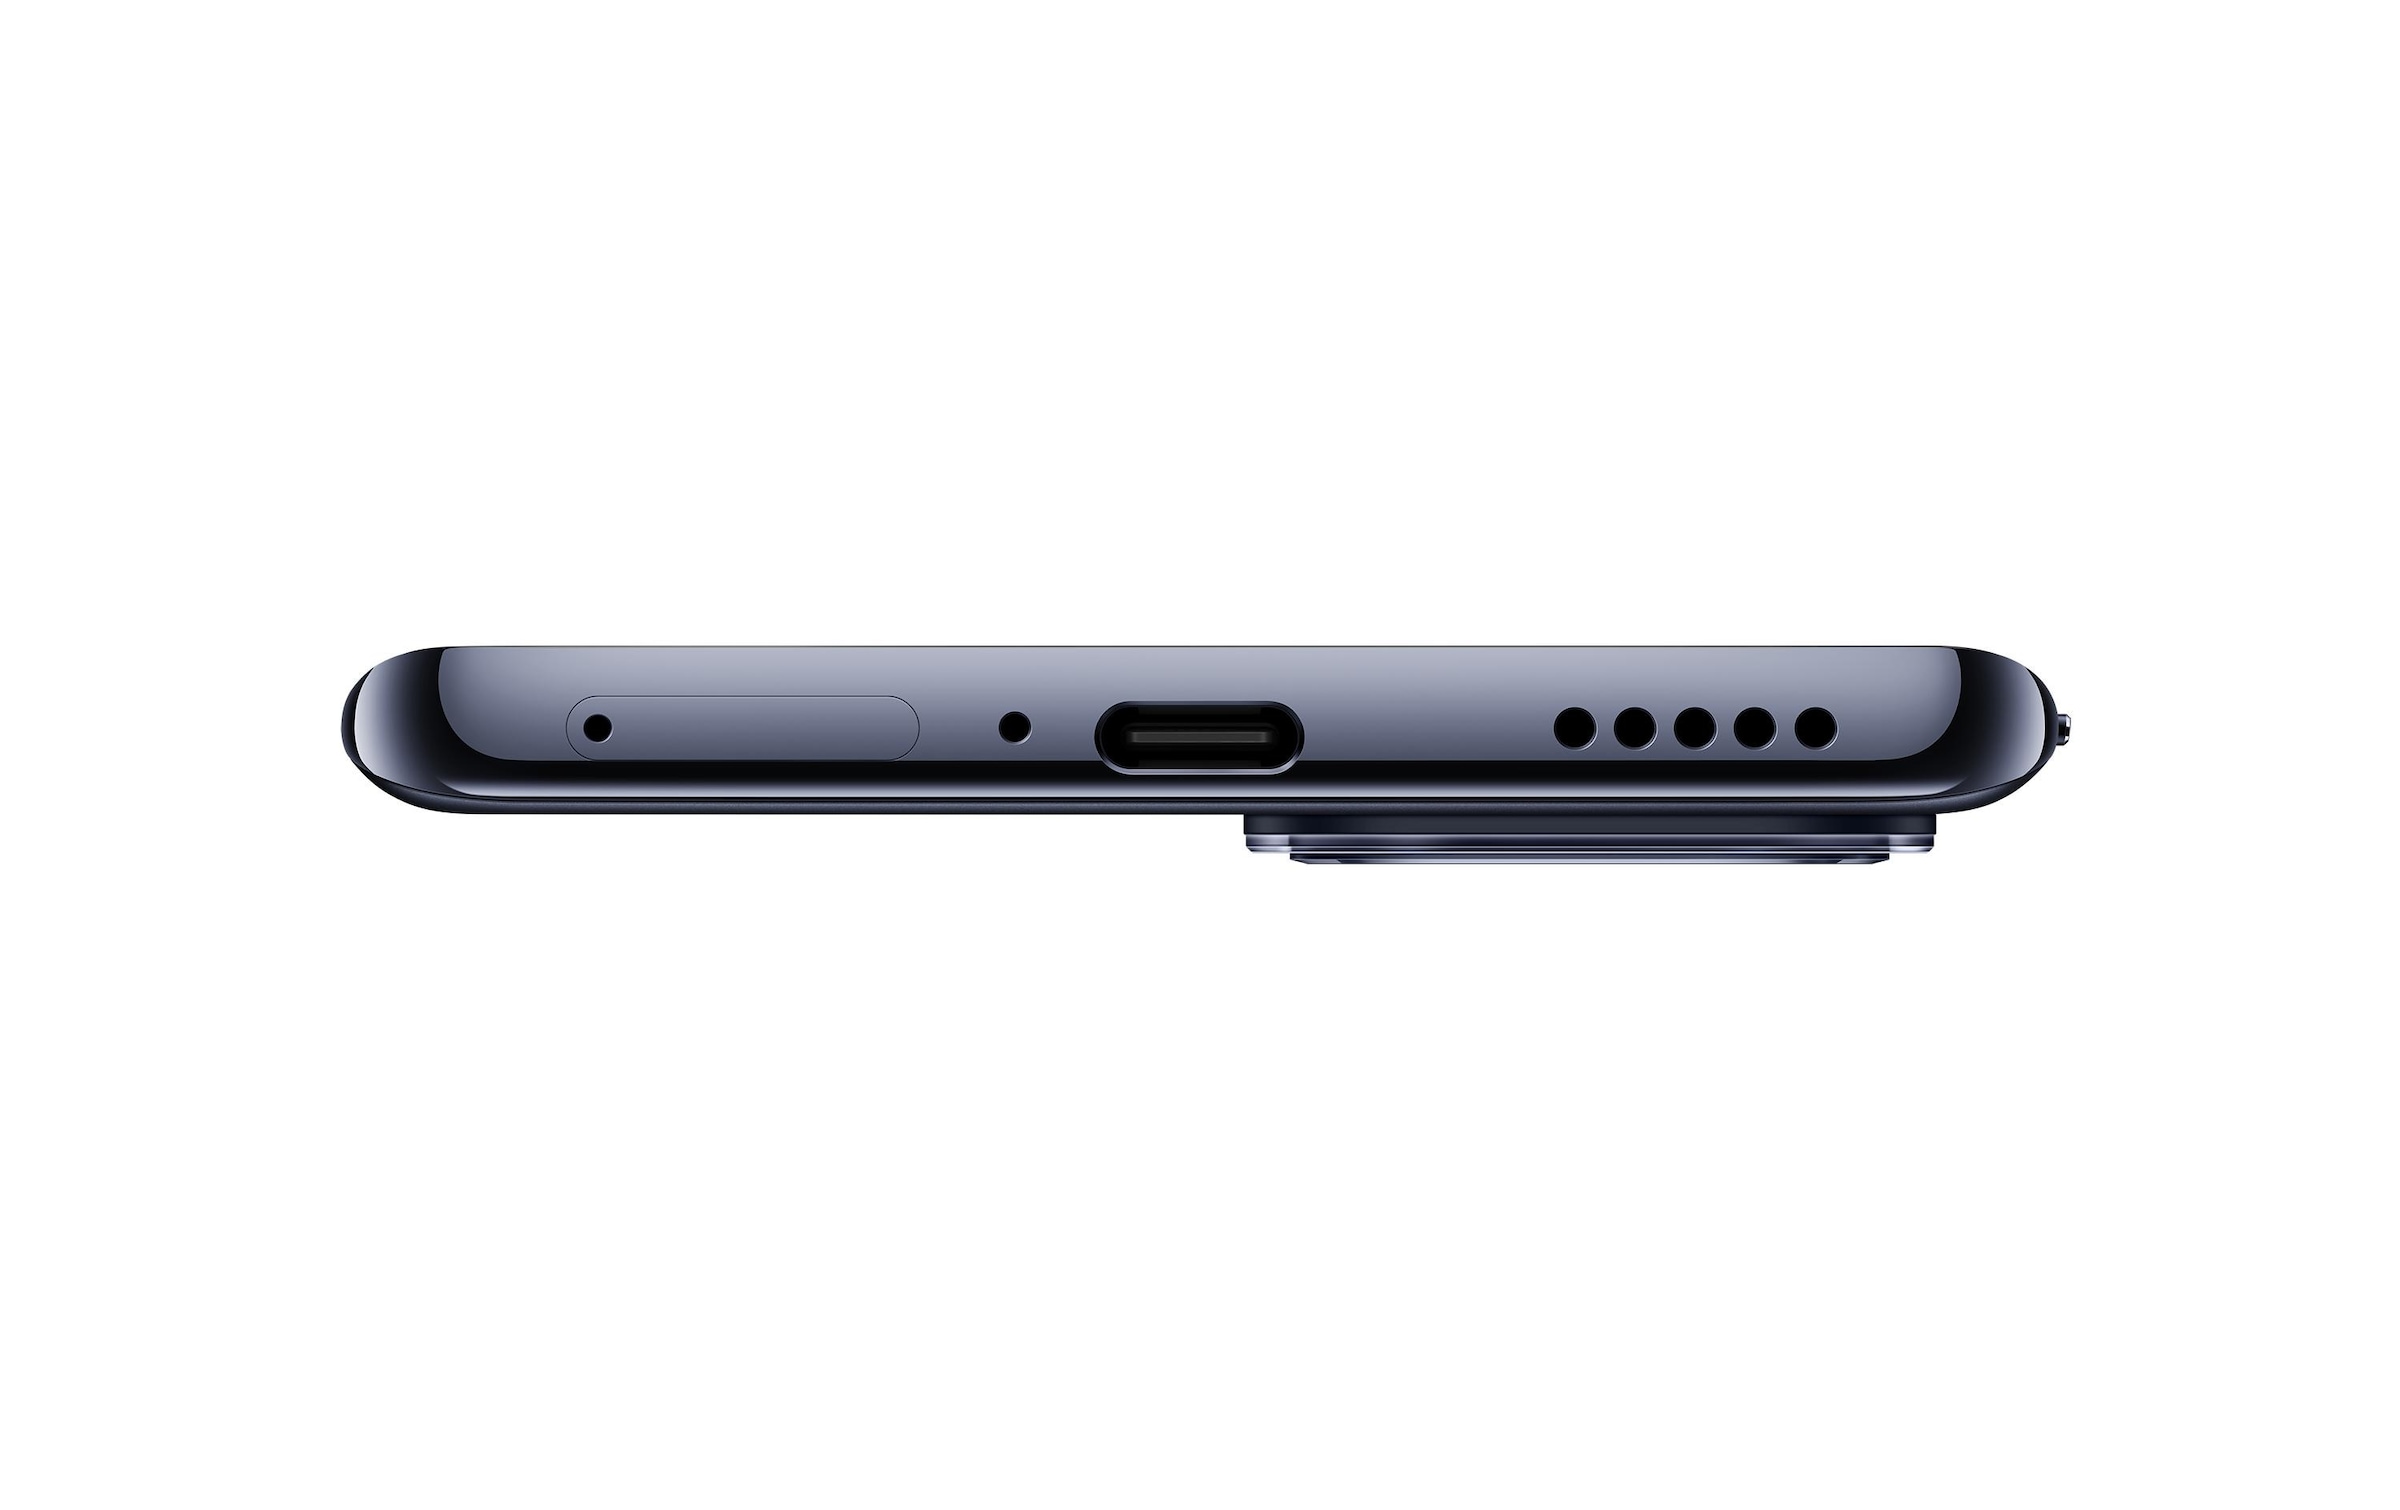 Xiaomi Smartphone »Xiaomi 13 Lite 128 GB Black«, Schwarz, 16,57 cm/6,55 Zoll, 128 GB Speicherplatz, 50 MP Kamera